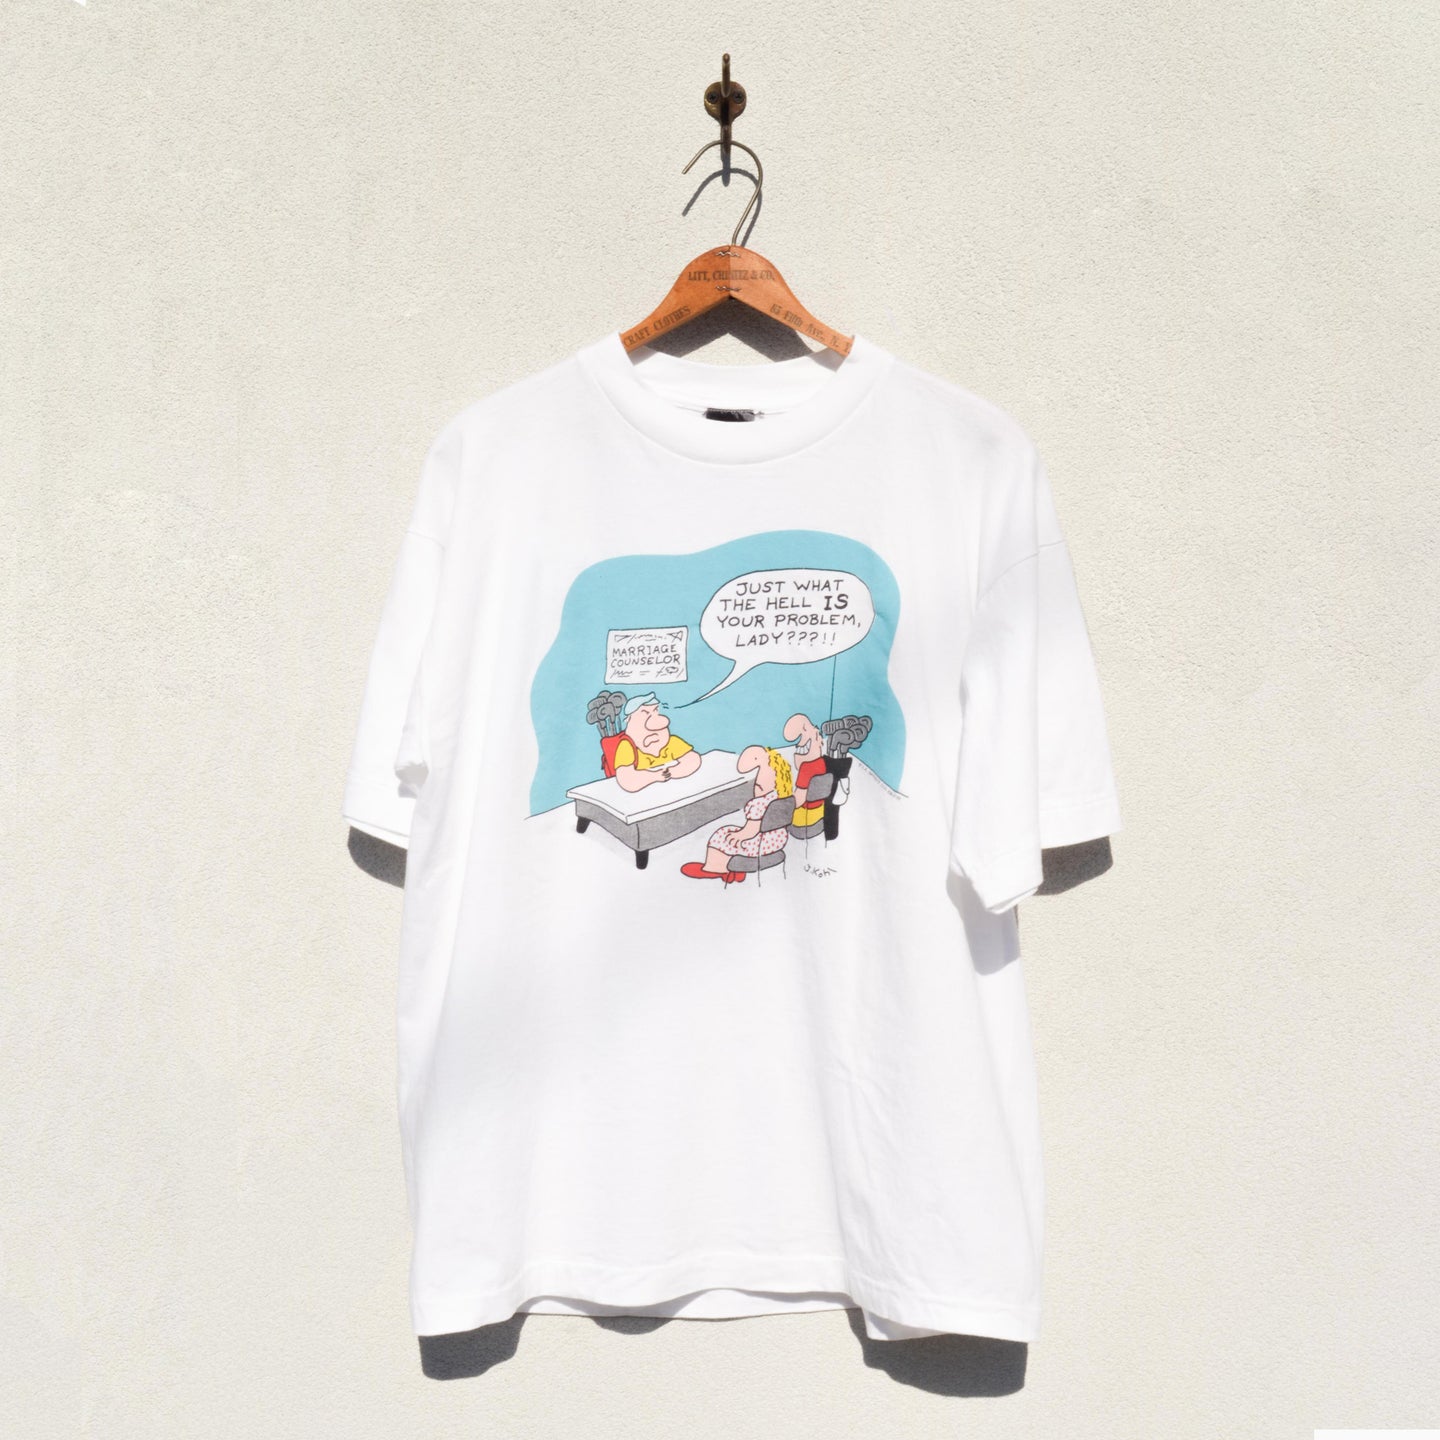 SUPER - Comic Style Joke Print Tee Shirt